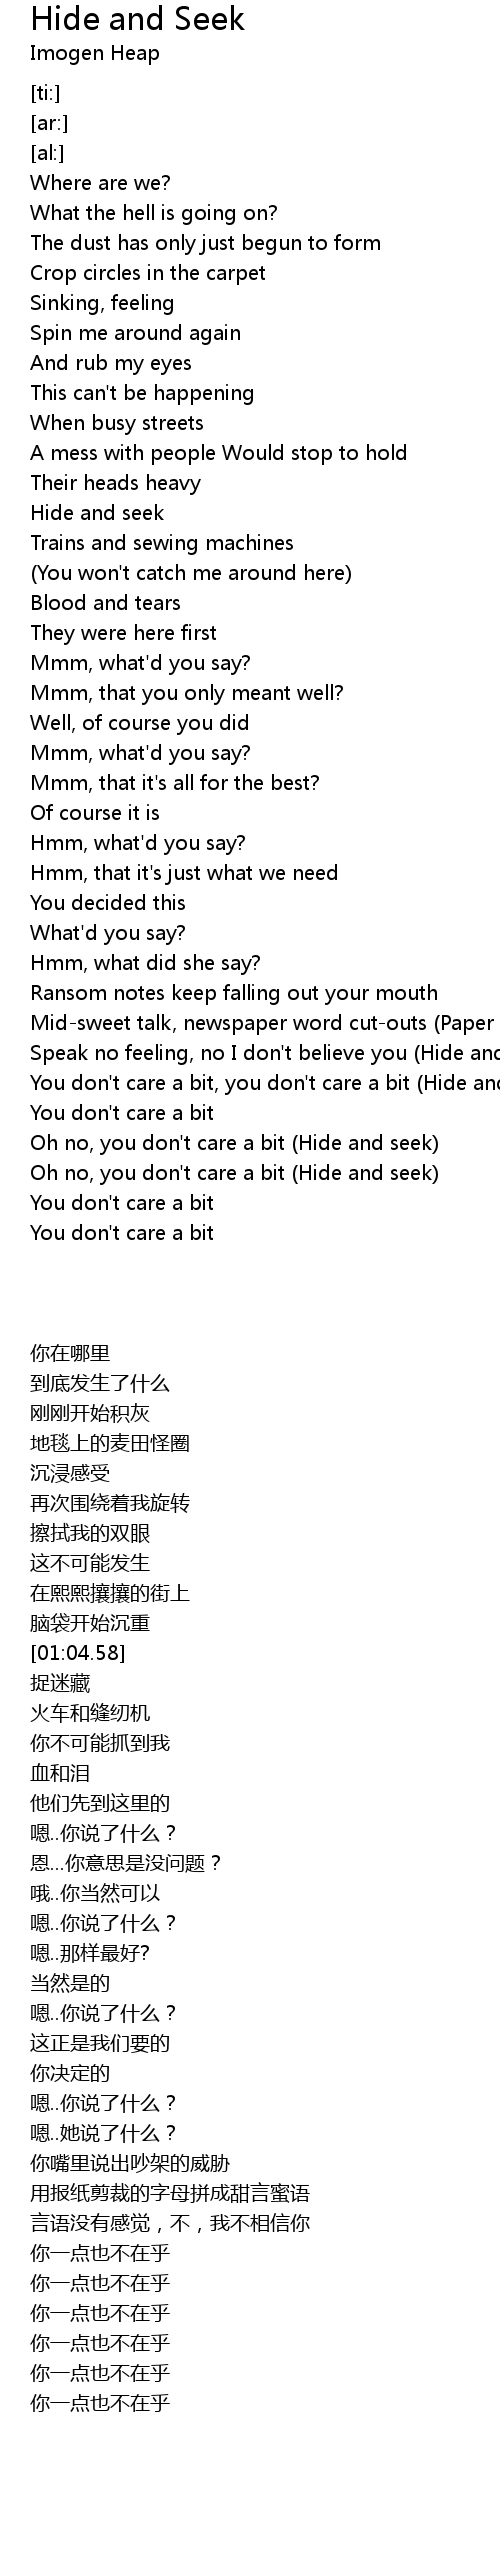 Hide And Seek Lyrics - VoicePlay - Only on JioSaavn